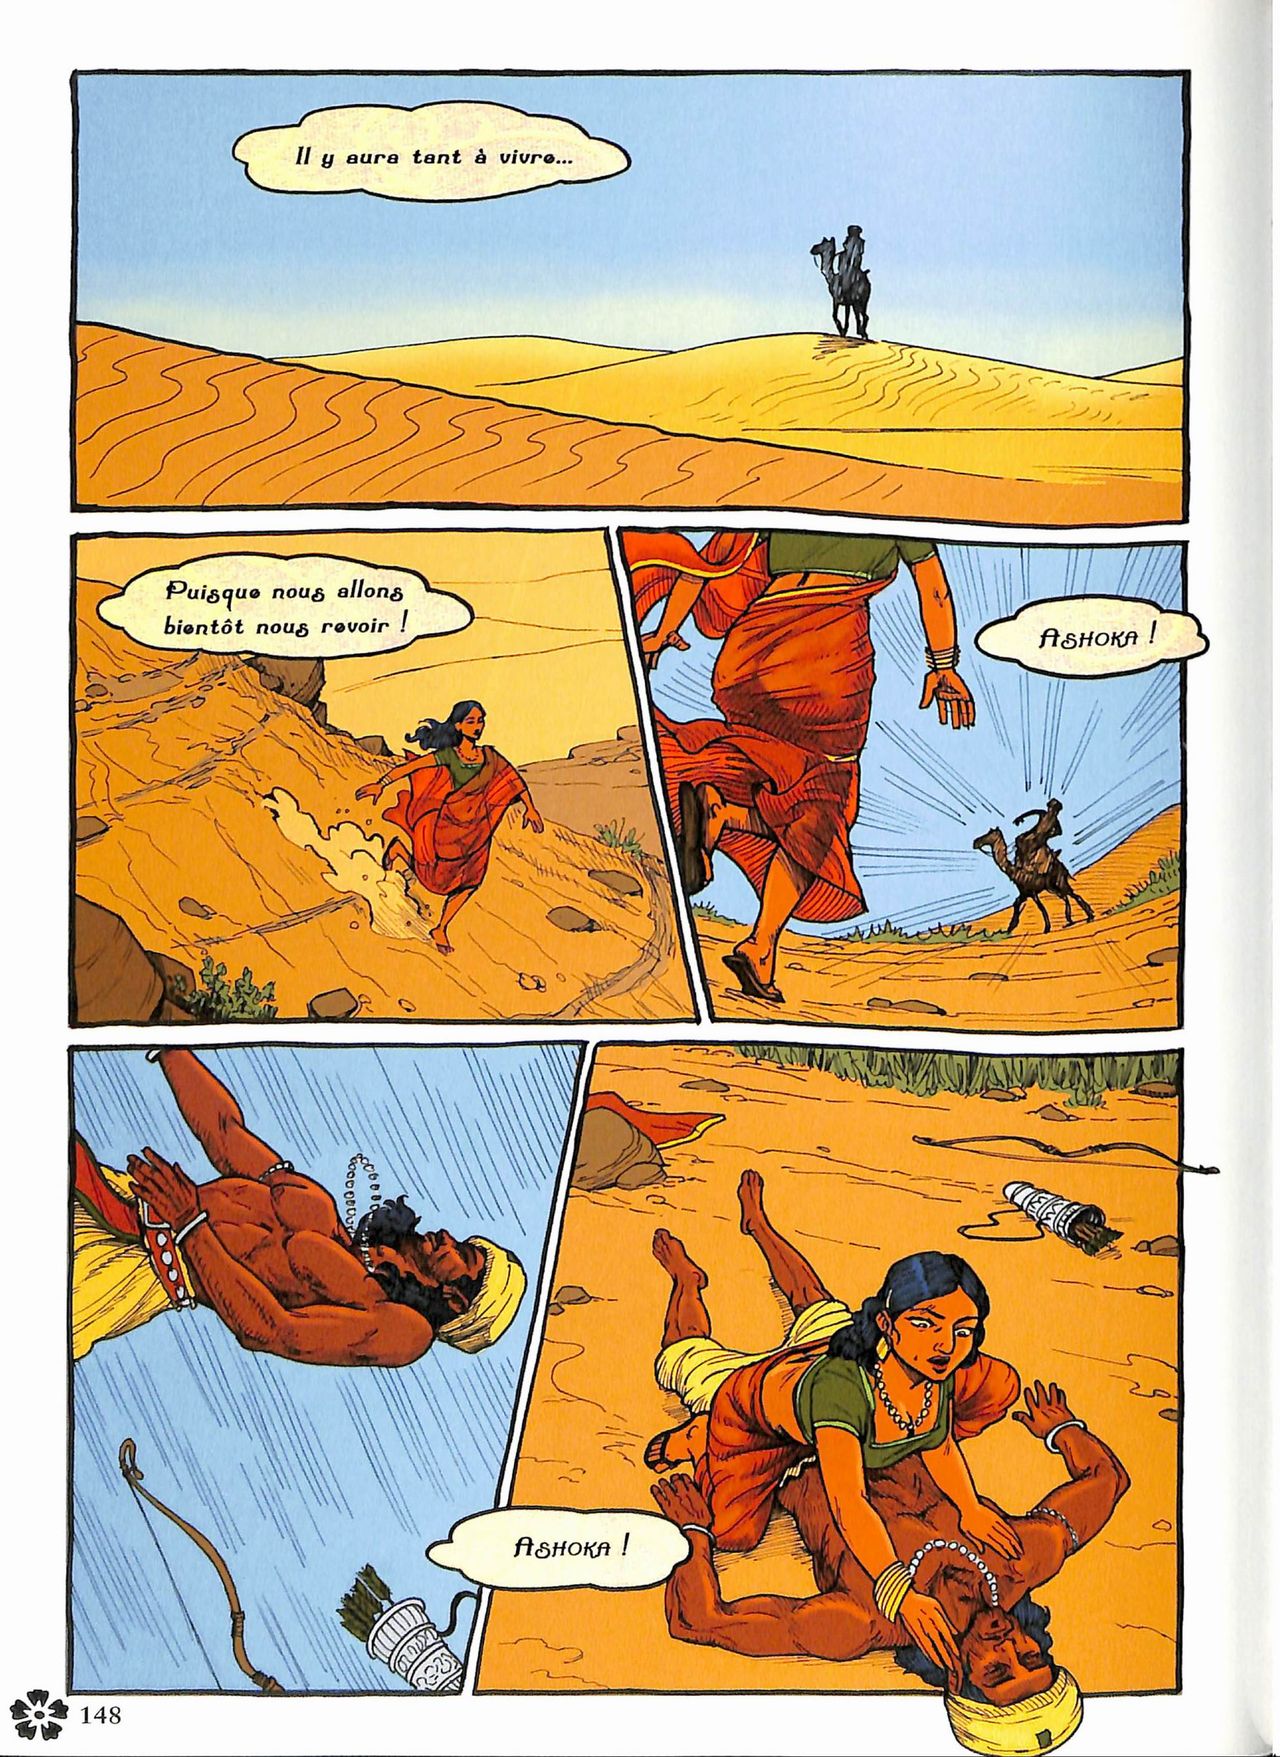 Kama Sutra en bandes dessinées - Kama Sutra with Comics numero d'image 148